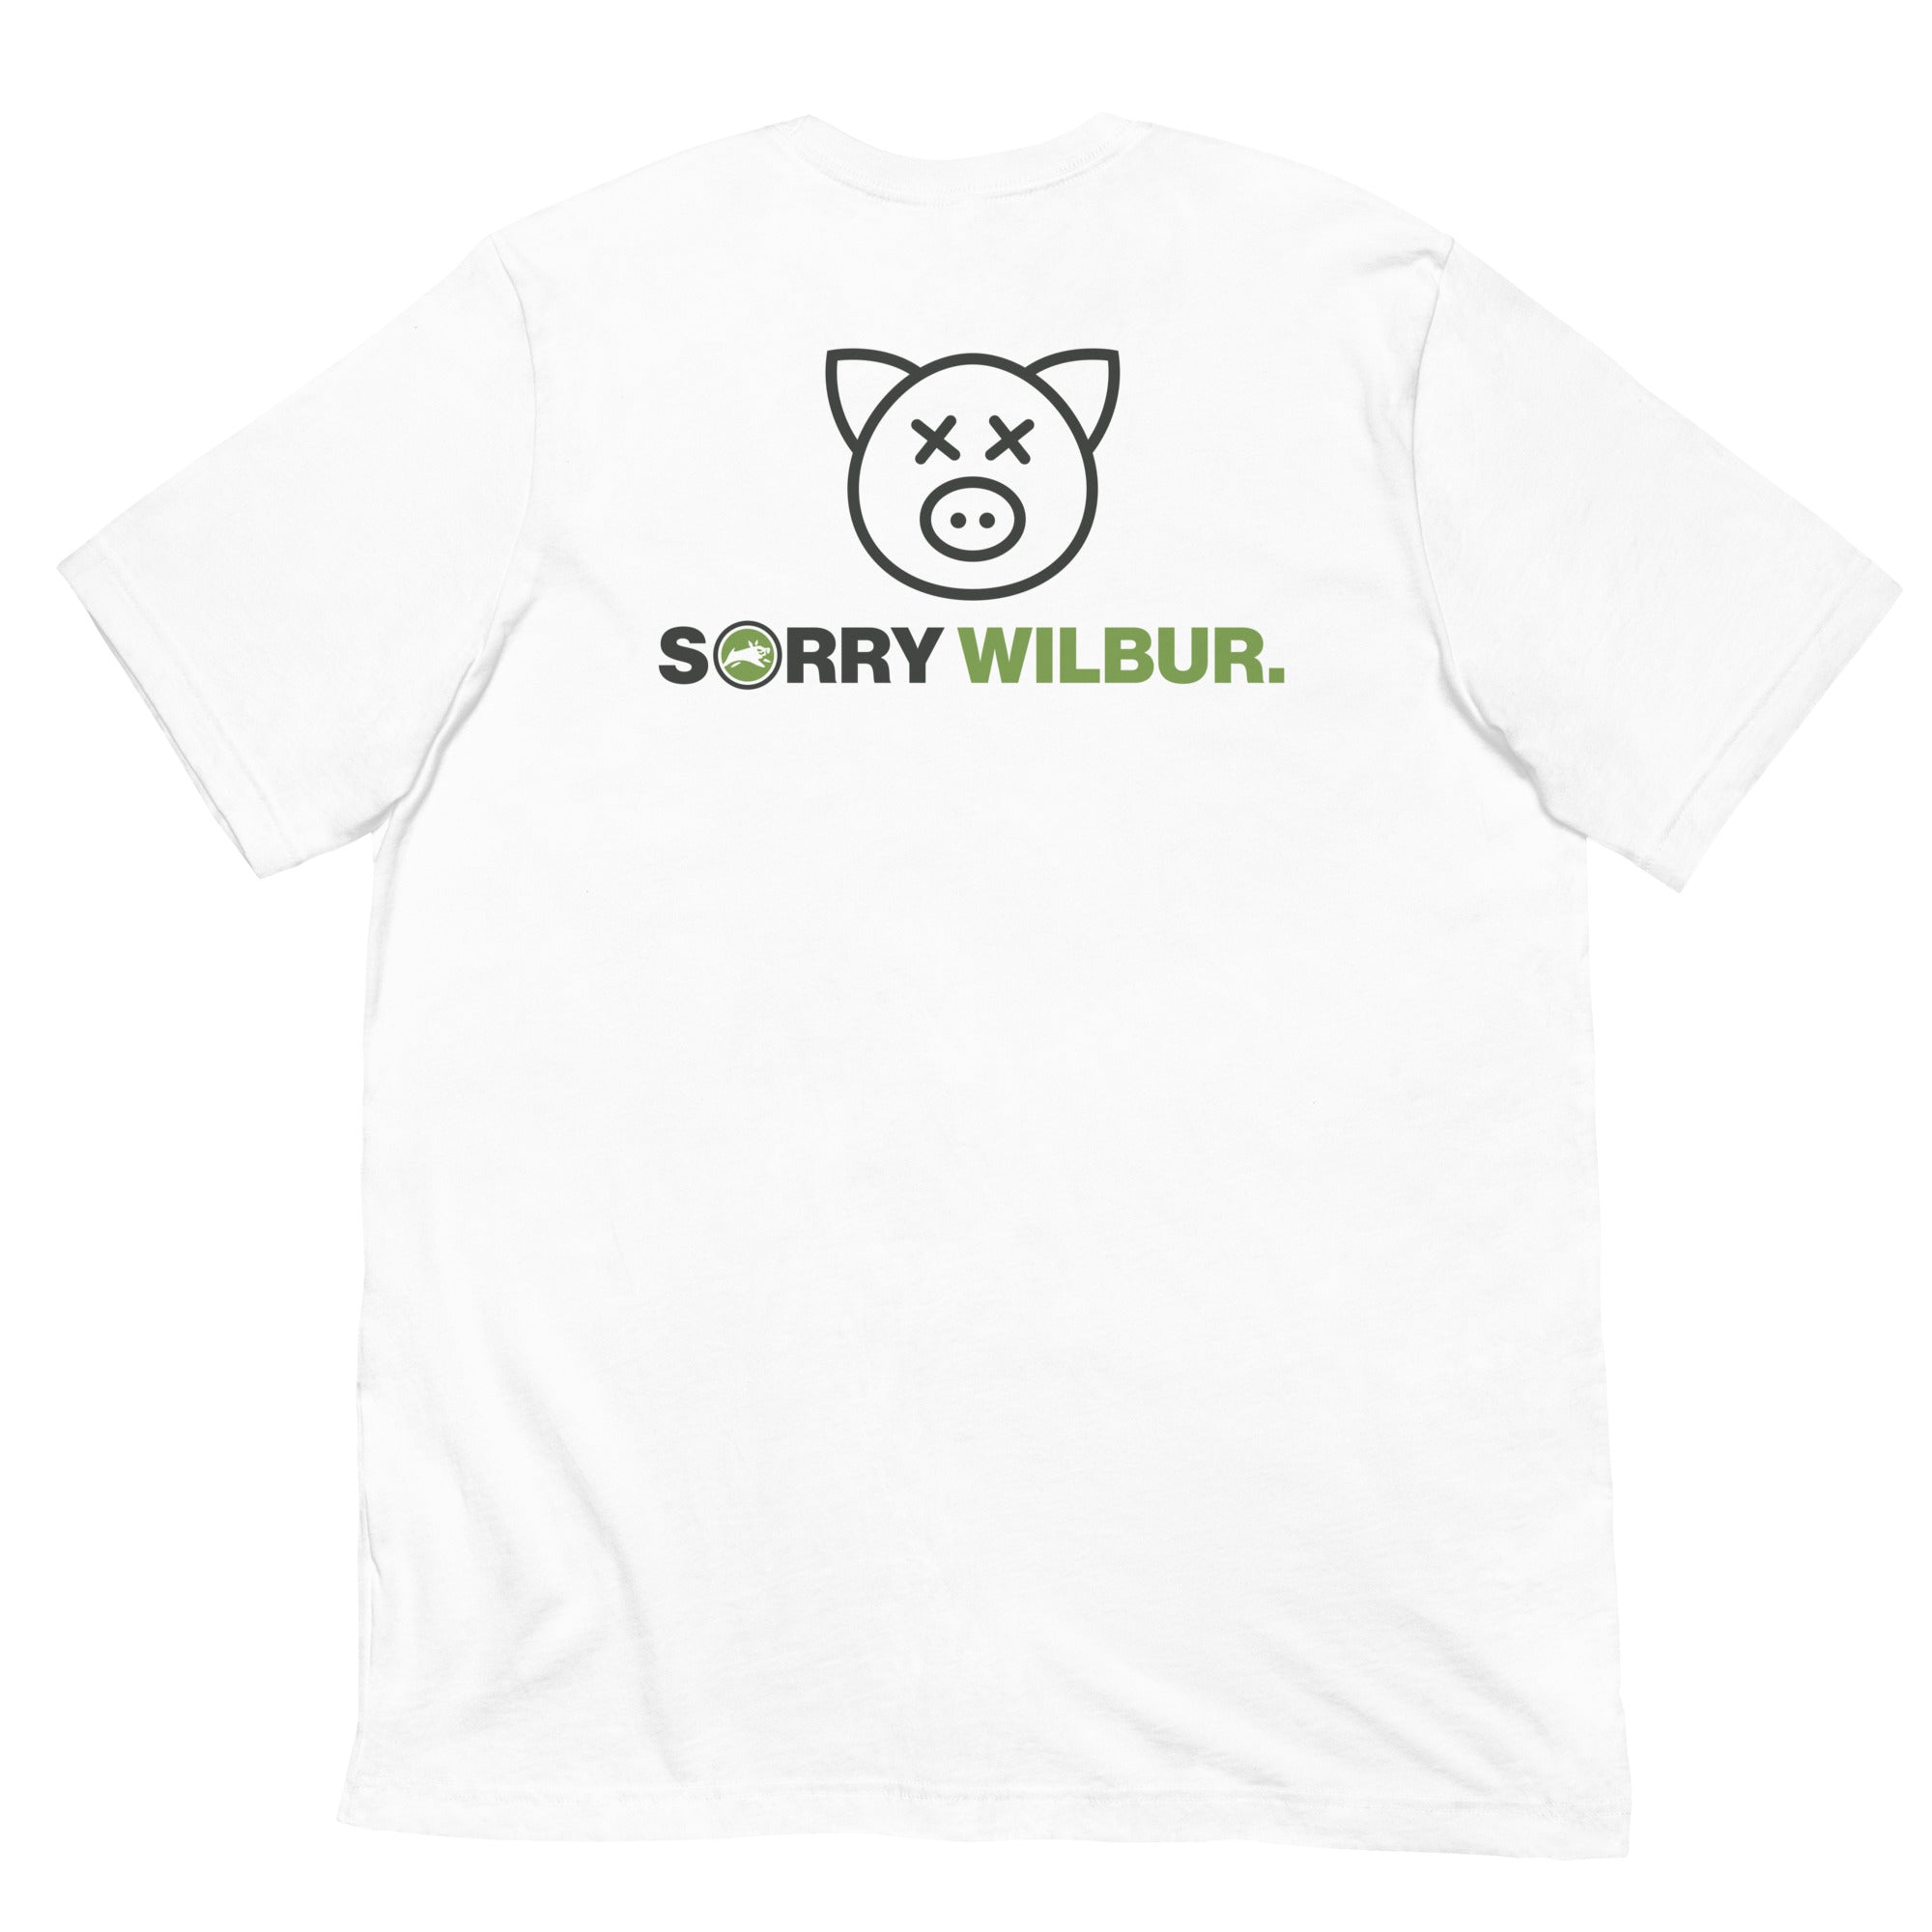 Sorry Wilbur. - Short-Sleeve Unisex T-Shirt